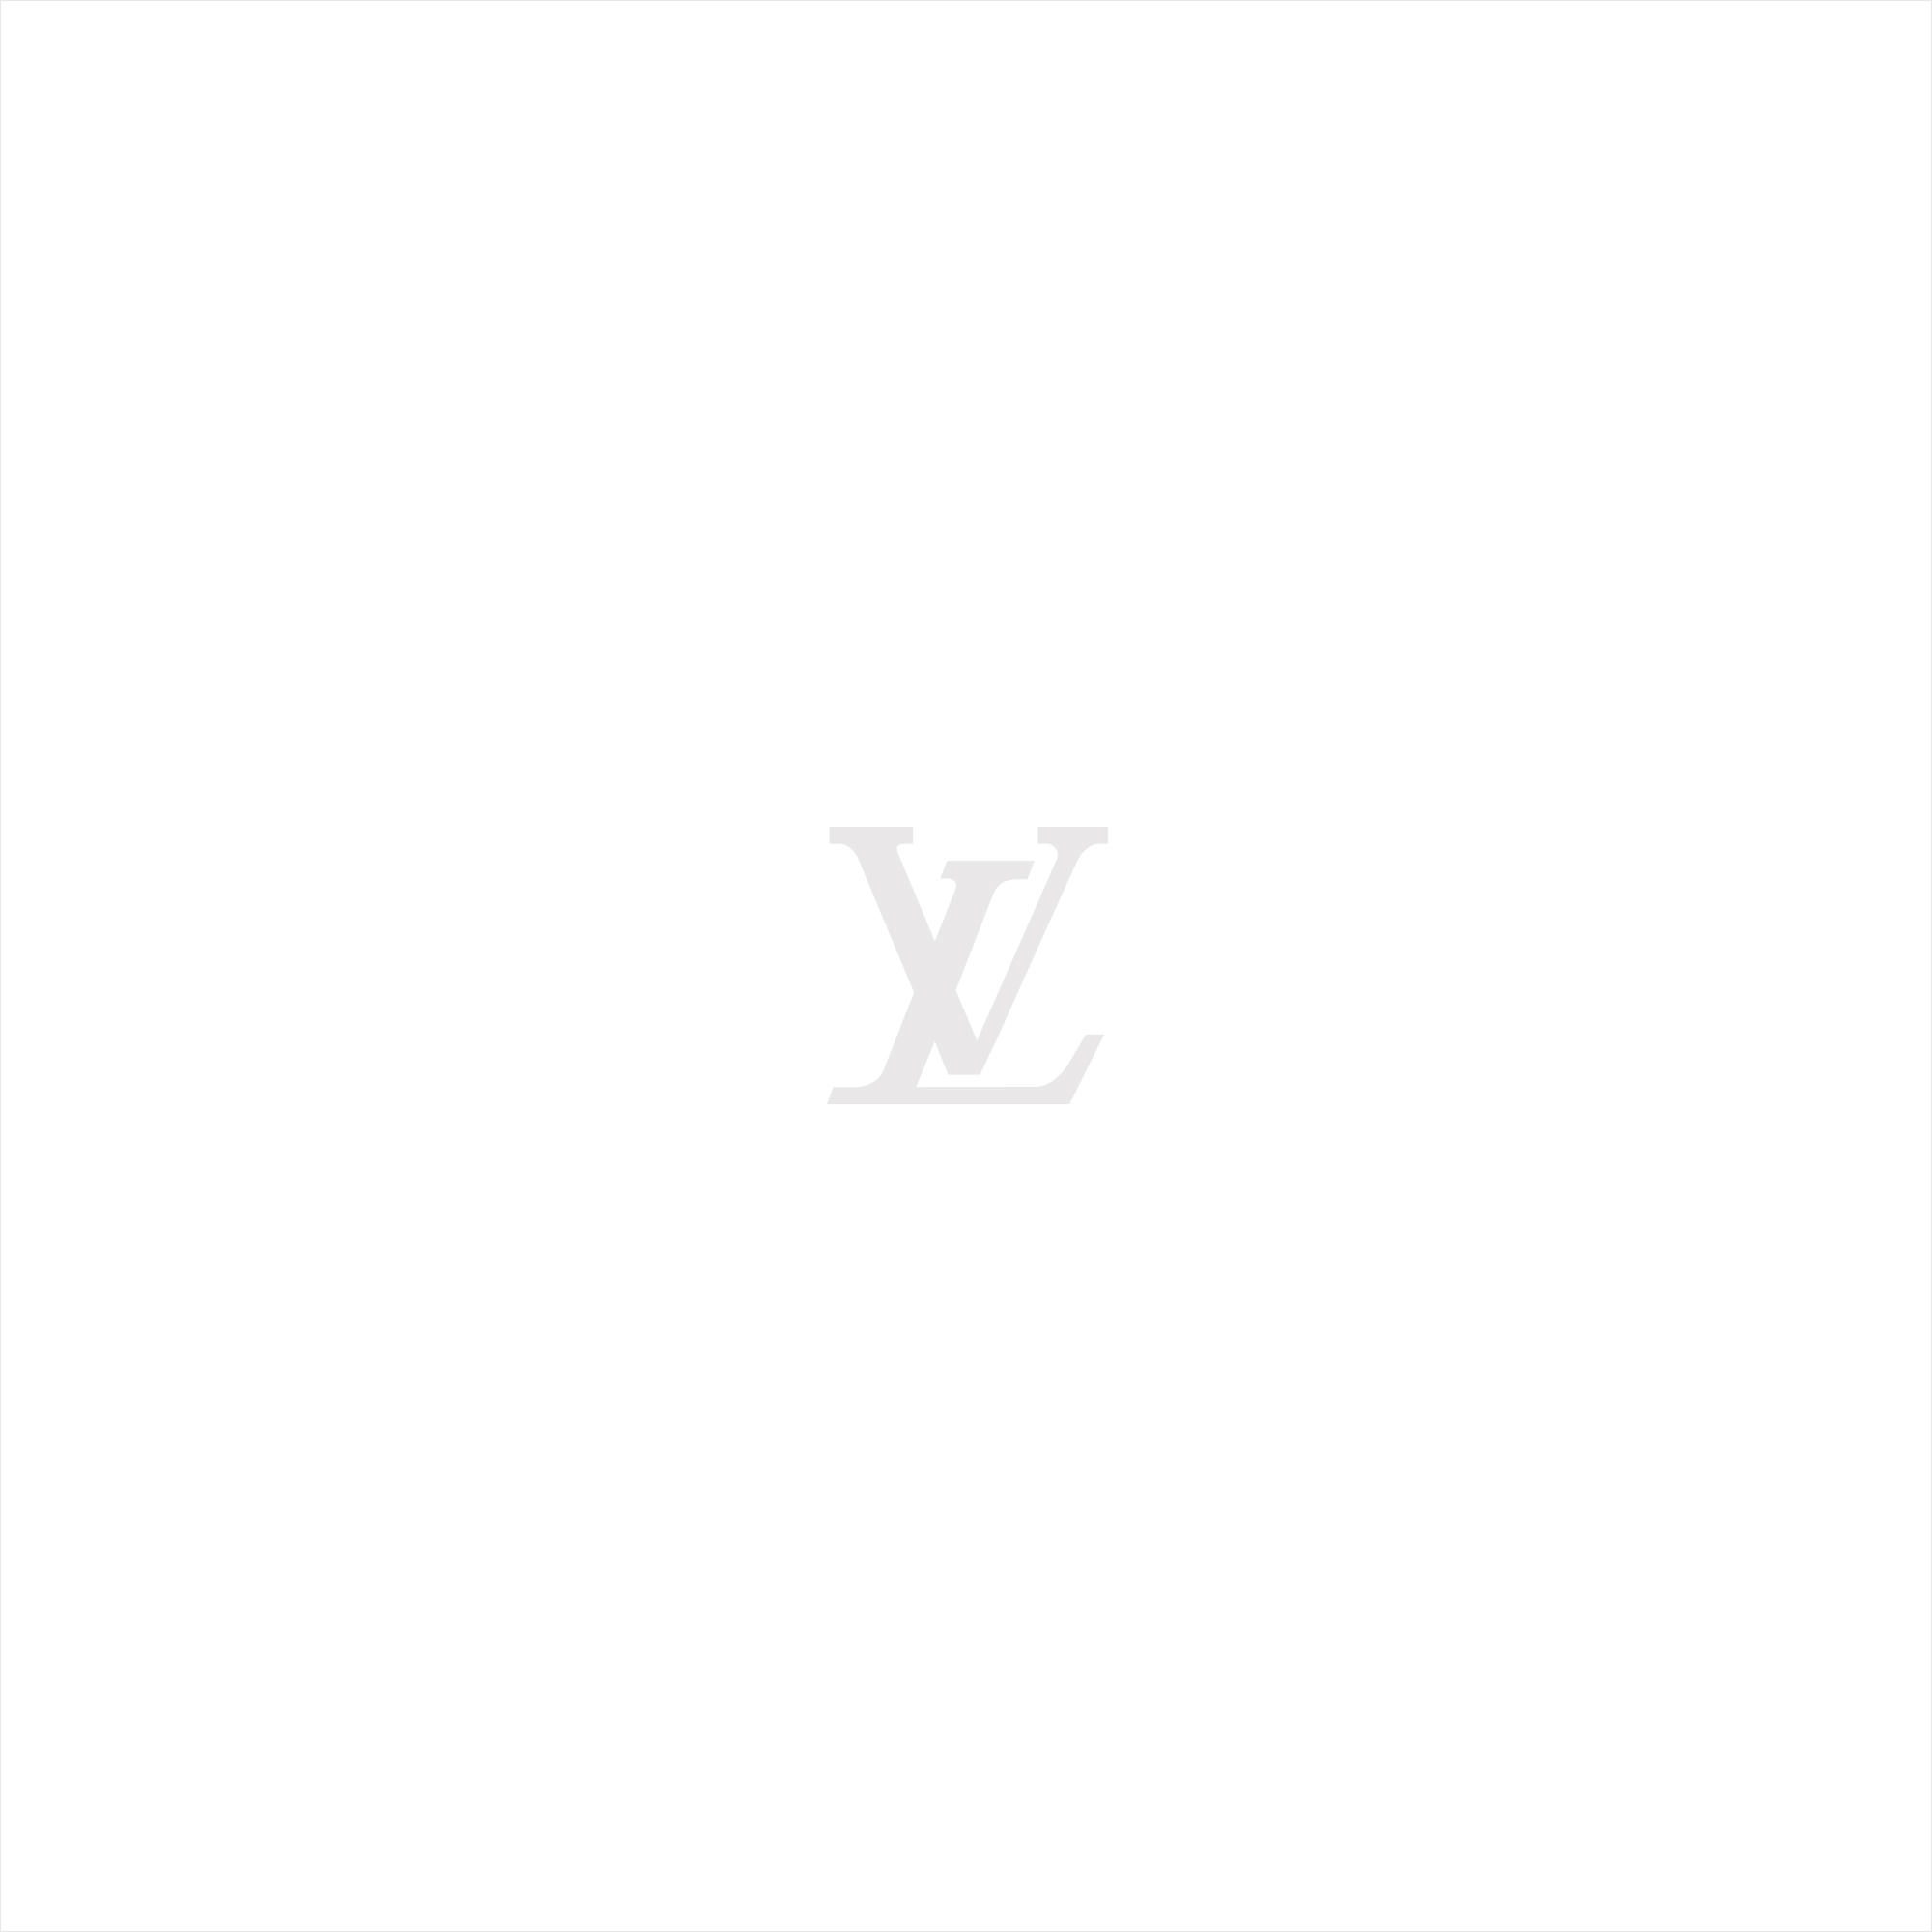 lv logo white png - Clip Art Library